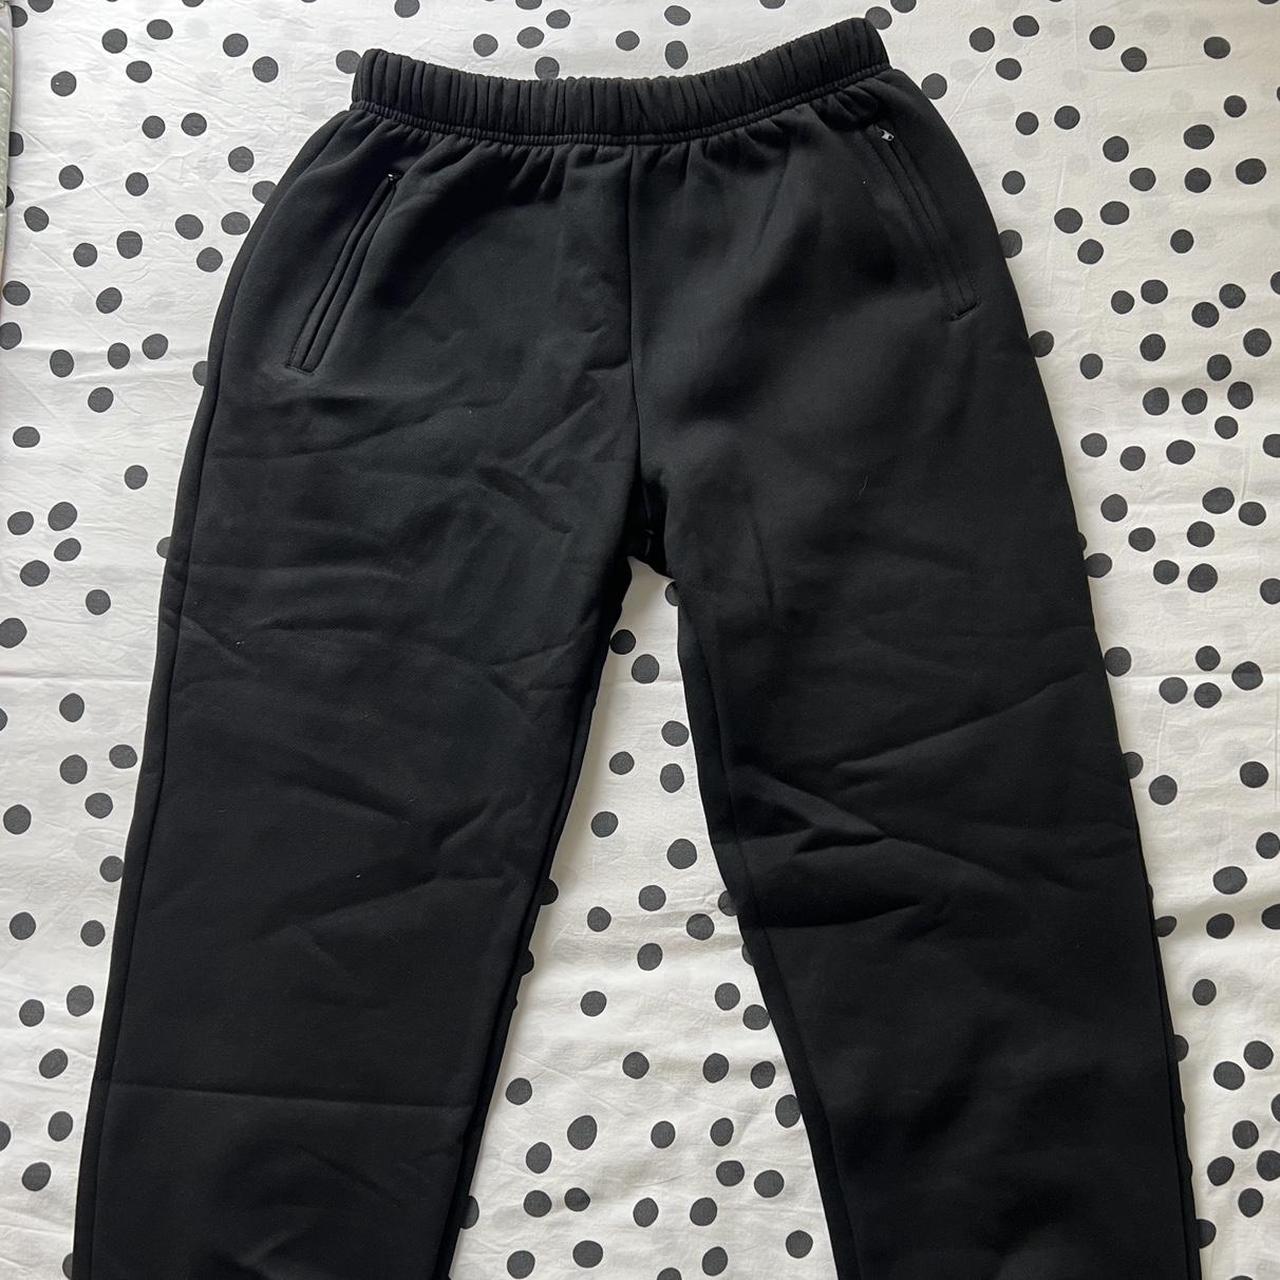 Yezzy Sweatpants in Black - XL ~Brand new with... - Depop